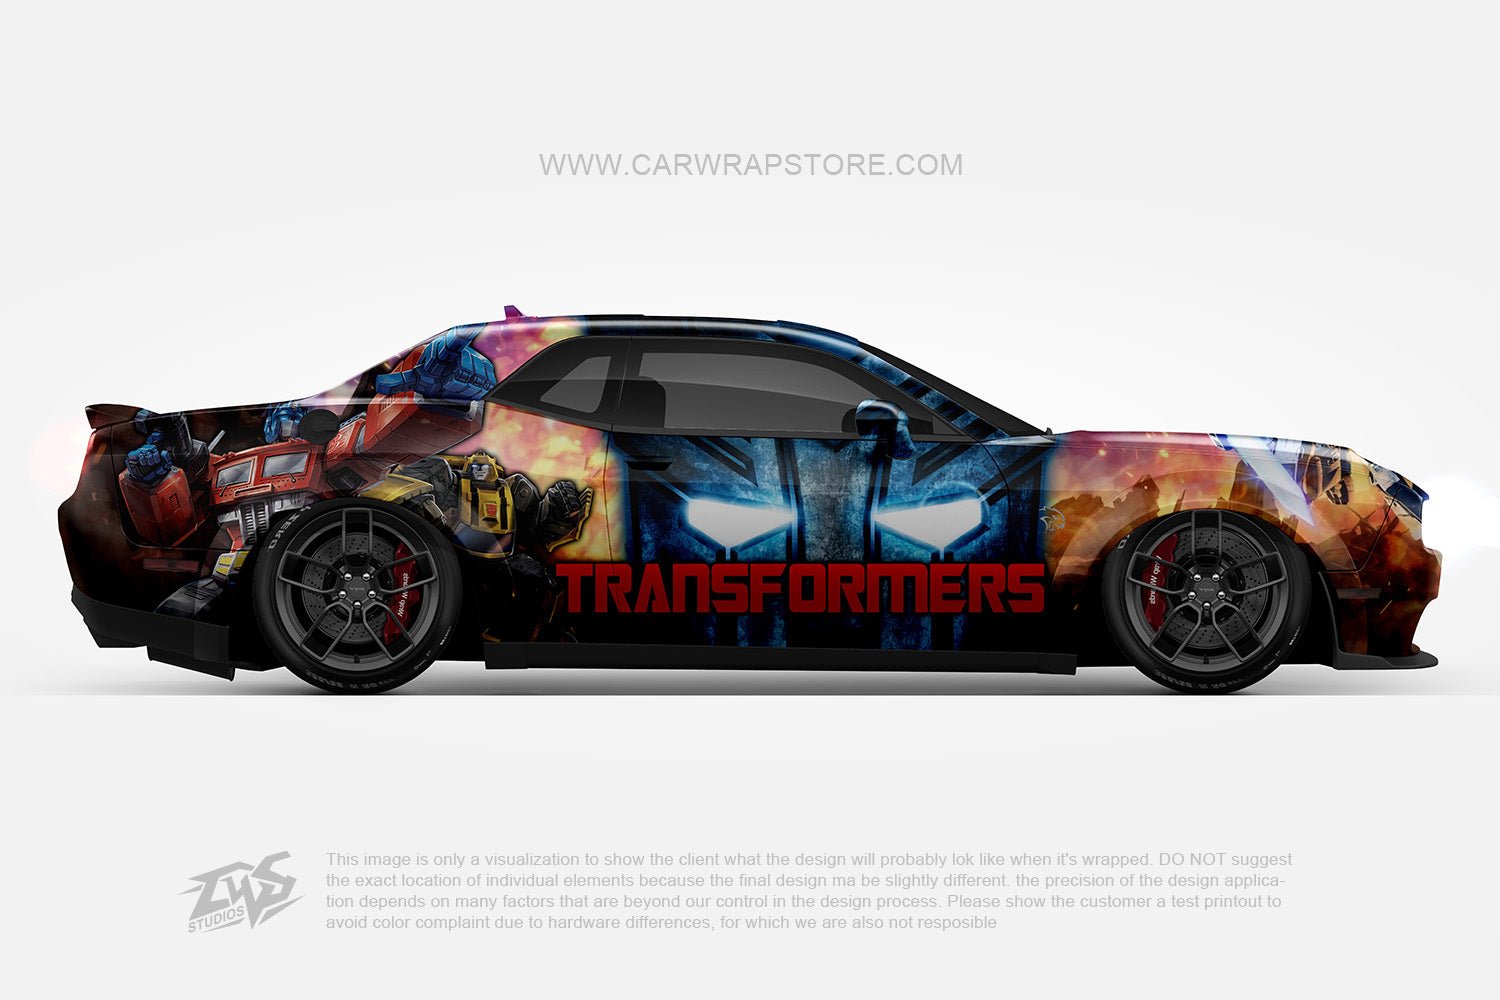 Transformers【TR-03】 - Car Wrap Store